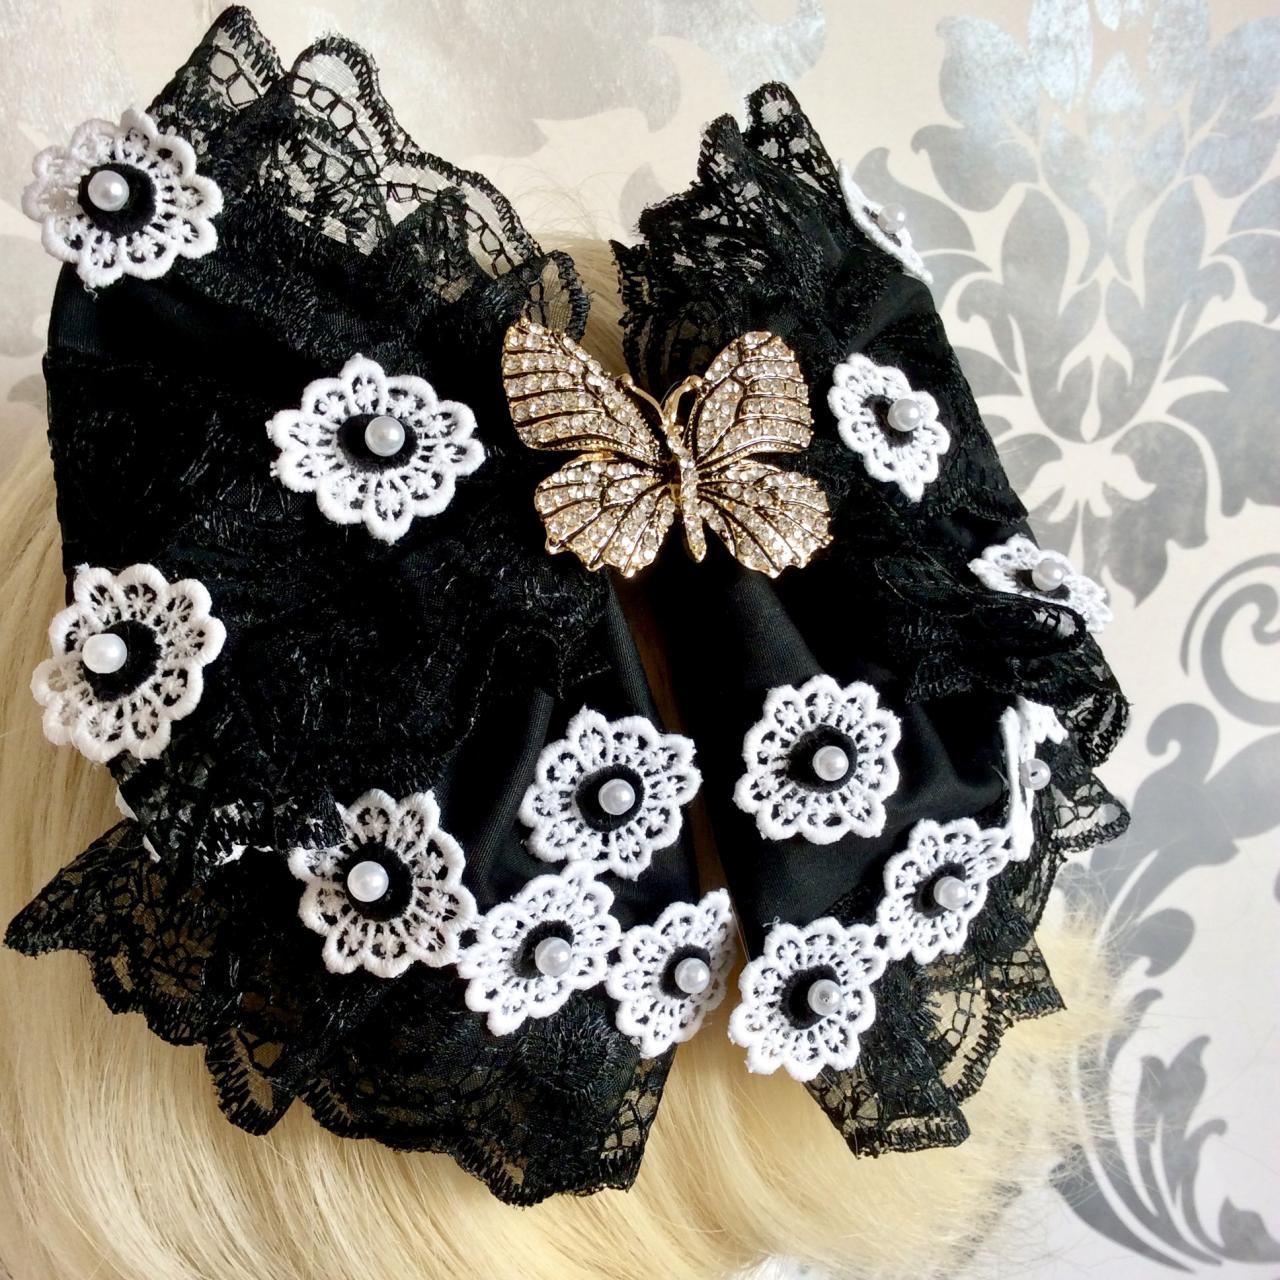 Pretty Hair Bow Headbow Black White Butterfly Gothic Lolita Lace Headpiece Headband Fascinator Beads Vintage Flower Clips Loop Floral Kawaii